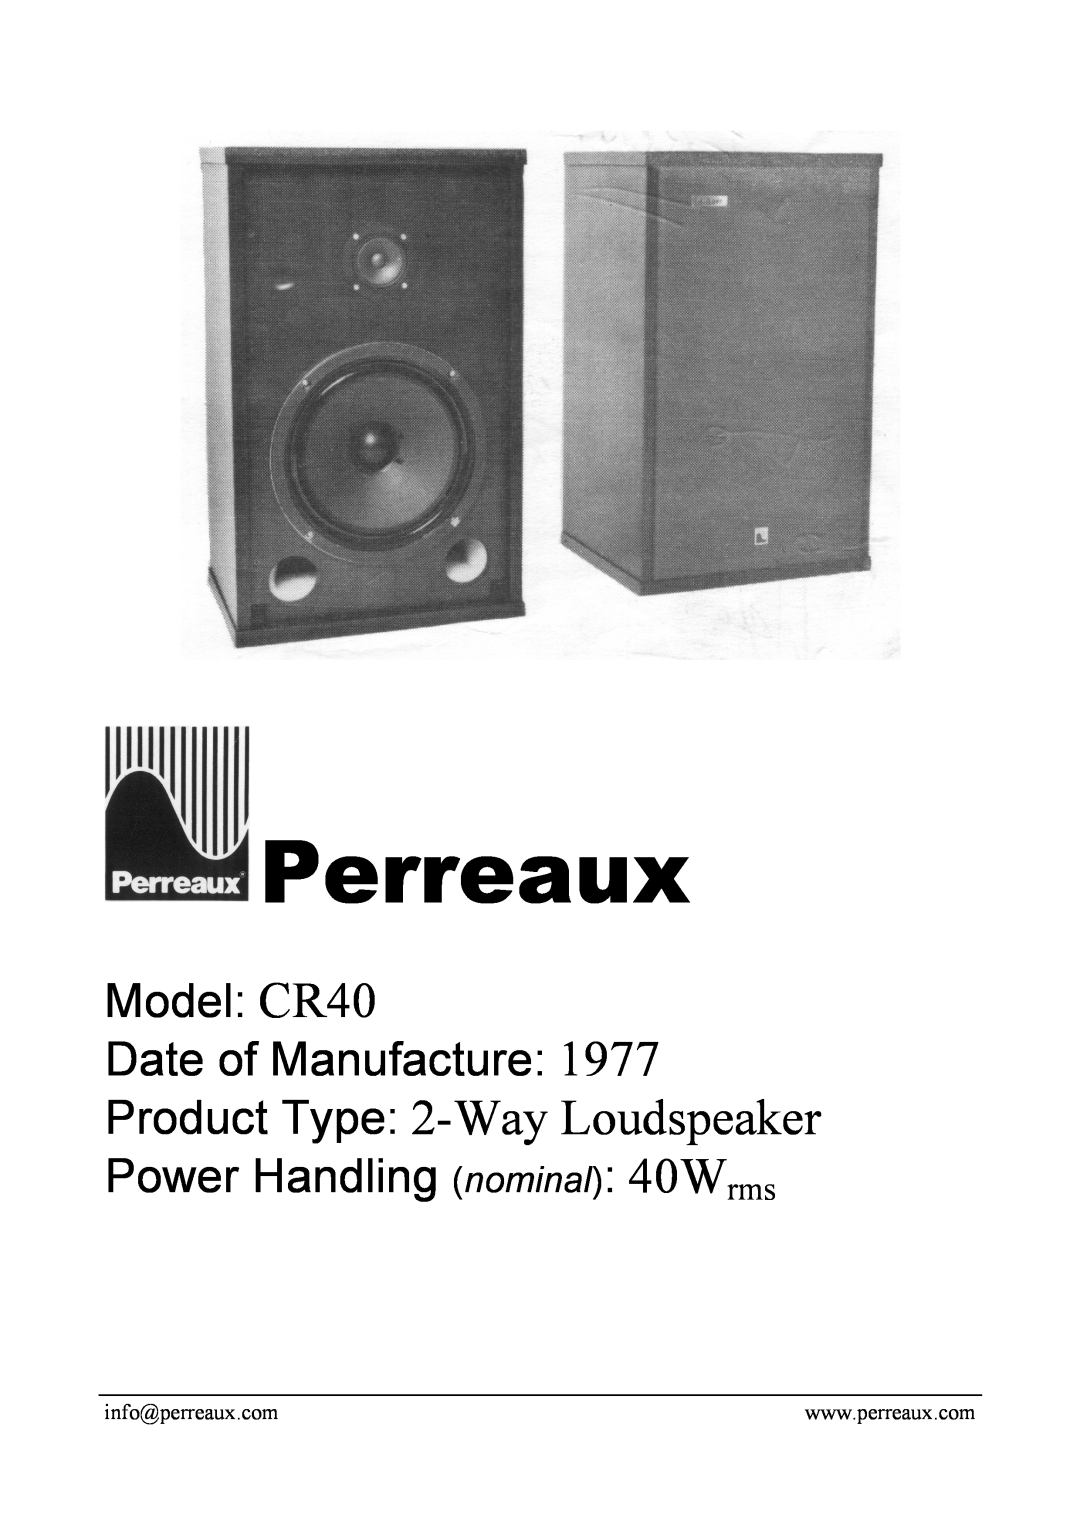 Perreaux manual Perreaux, Product Type 2-WayLoudspeaker, Model CR40 Date of Manufacture, Power Handling nominal 40Wrms 